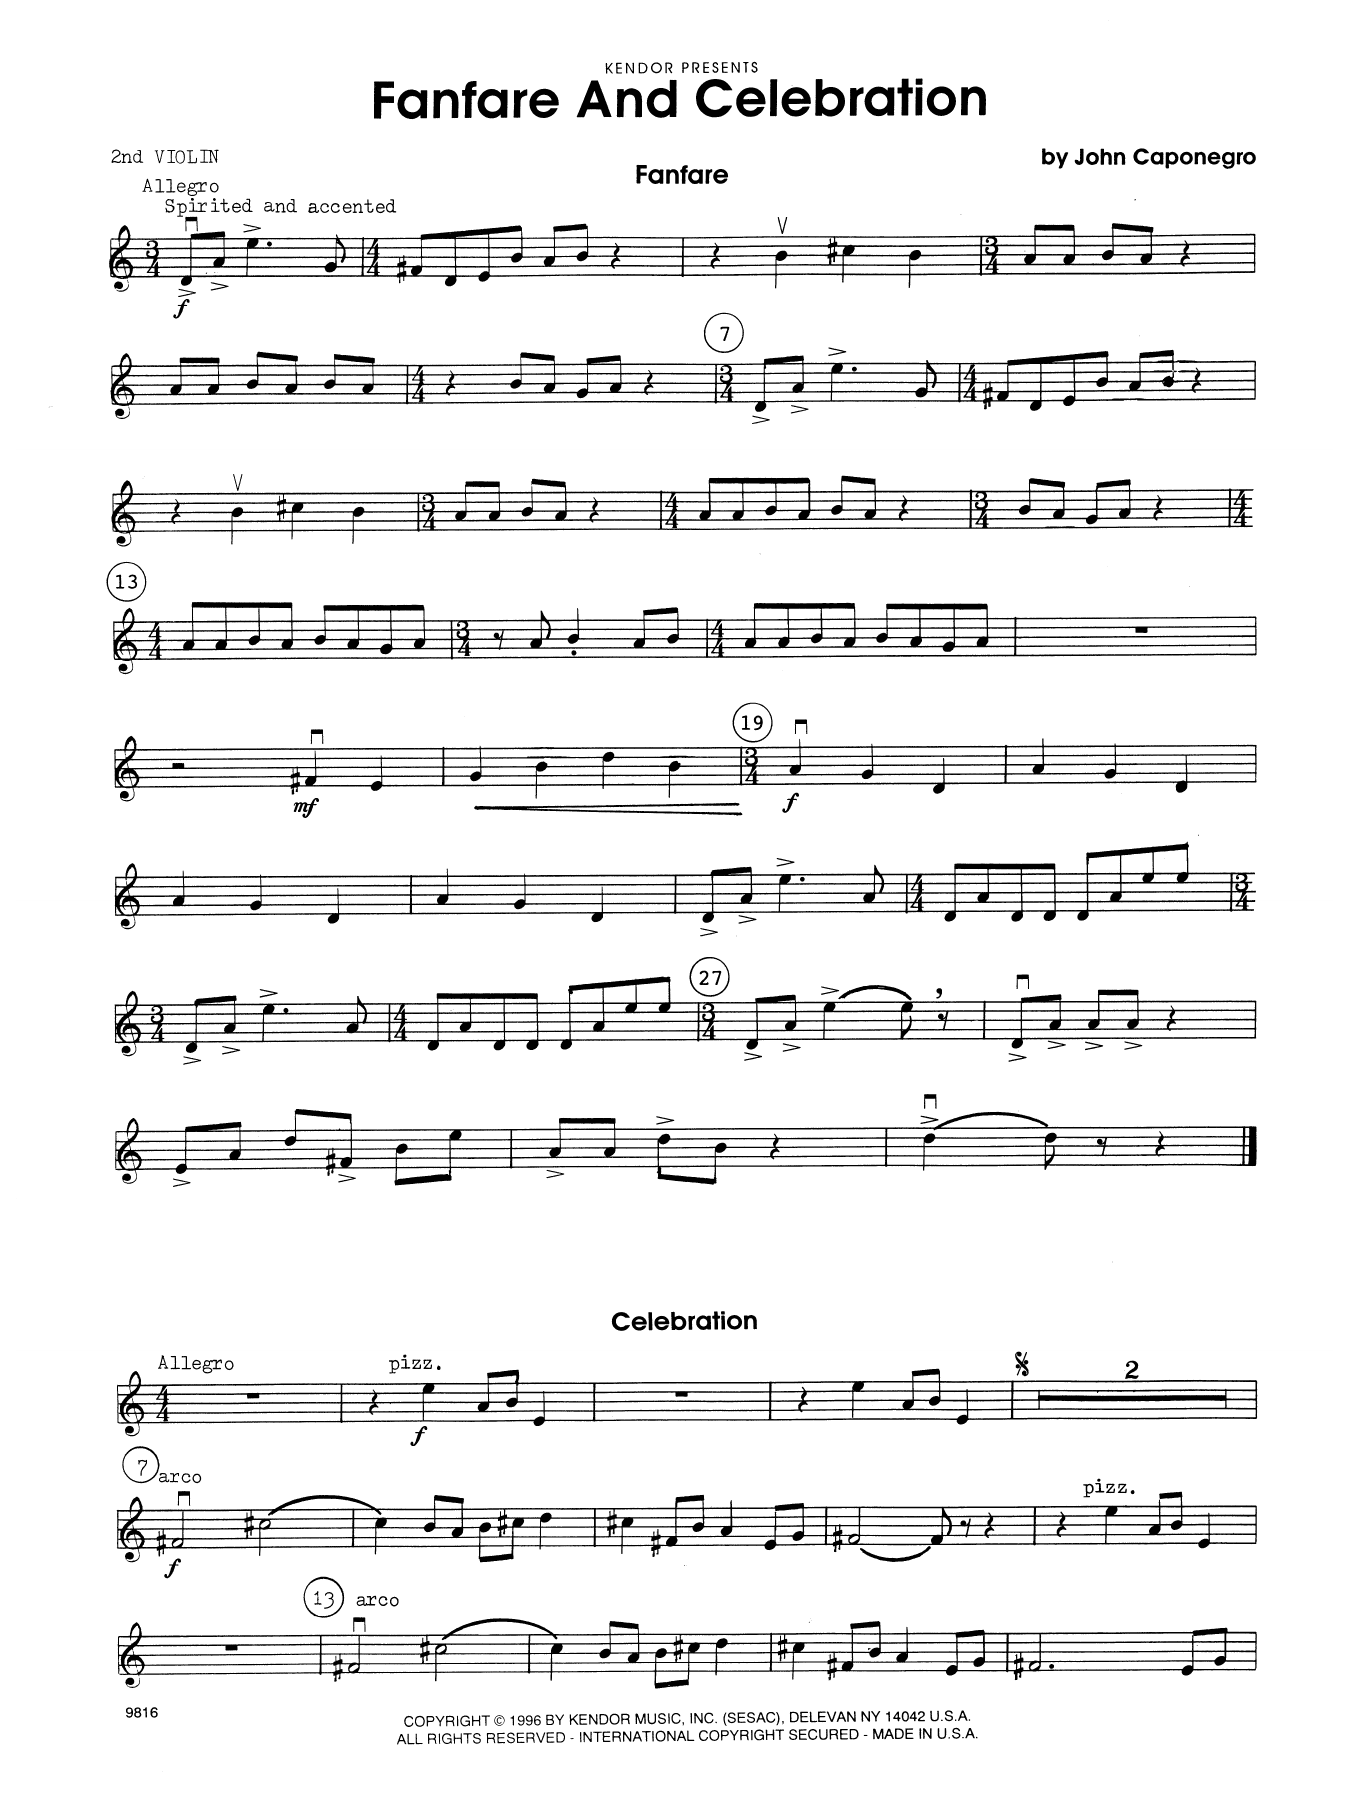 Download John Caponegro Fanfare and Celebration - 2nd Violin Sheet Music